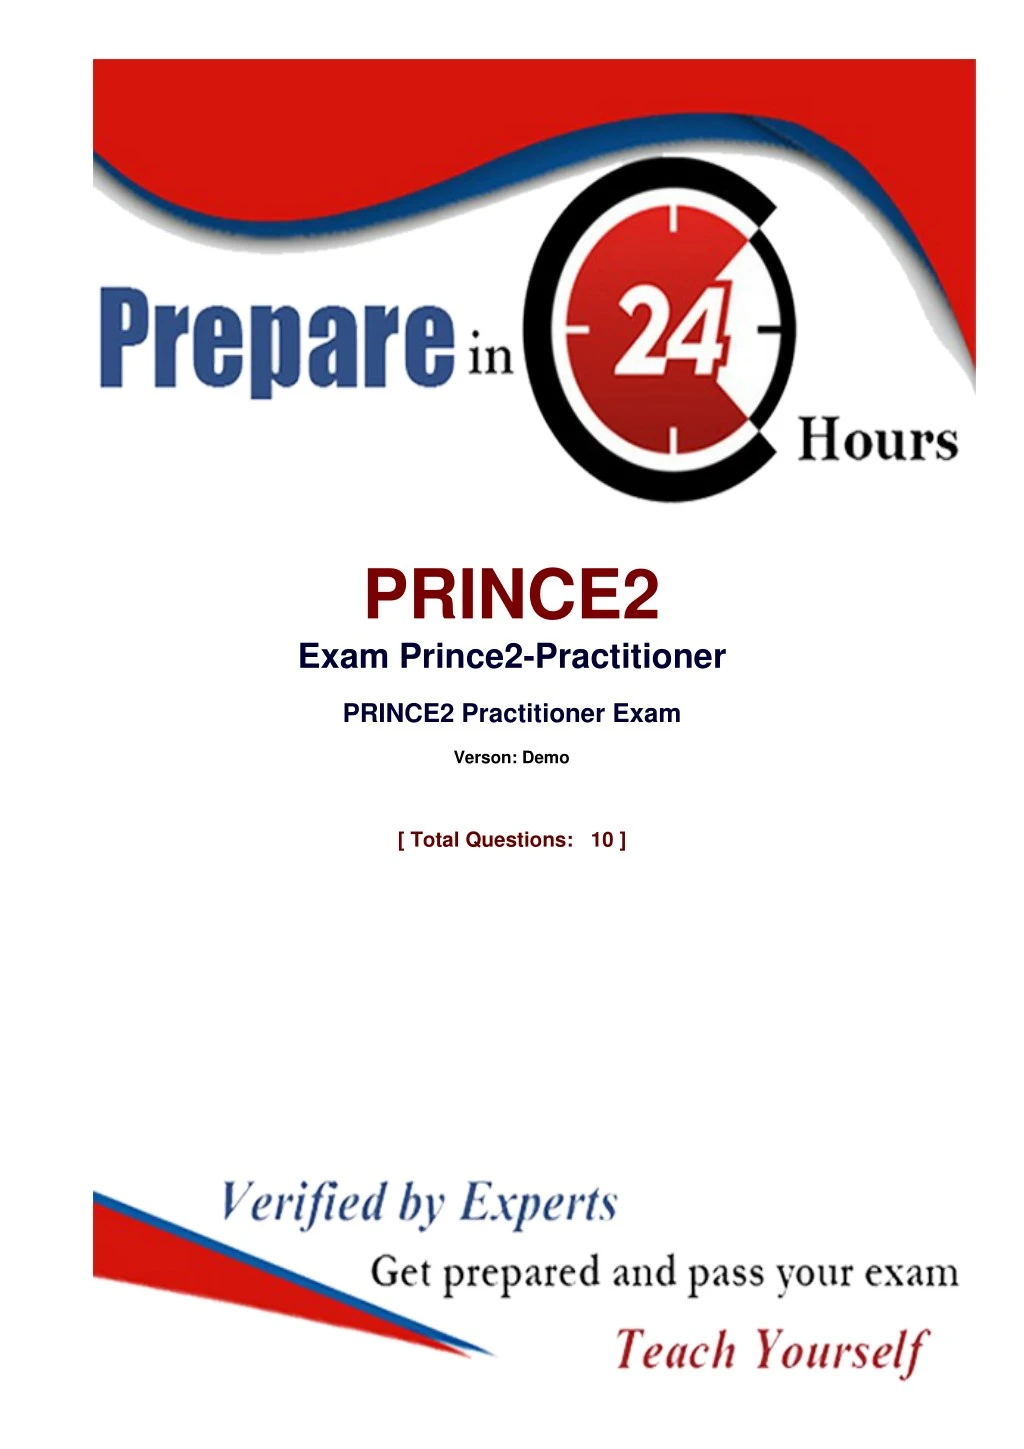 prince2 exam prince2 practitioner